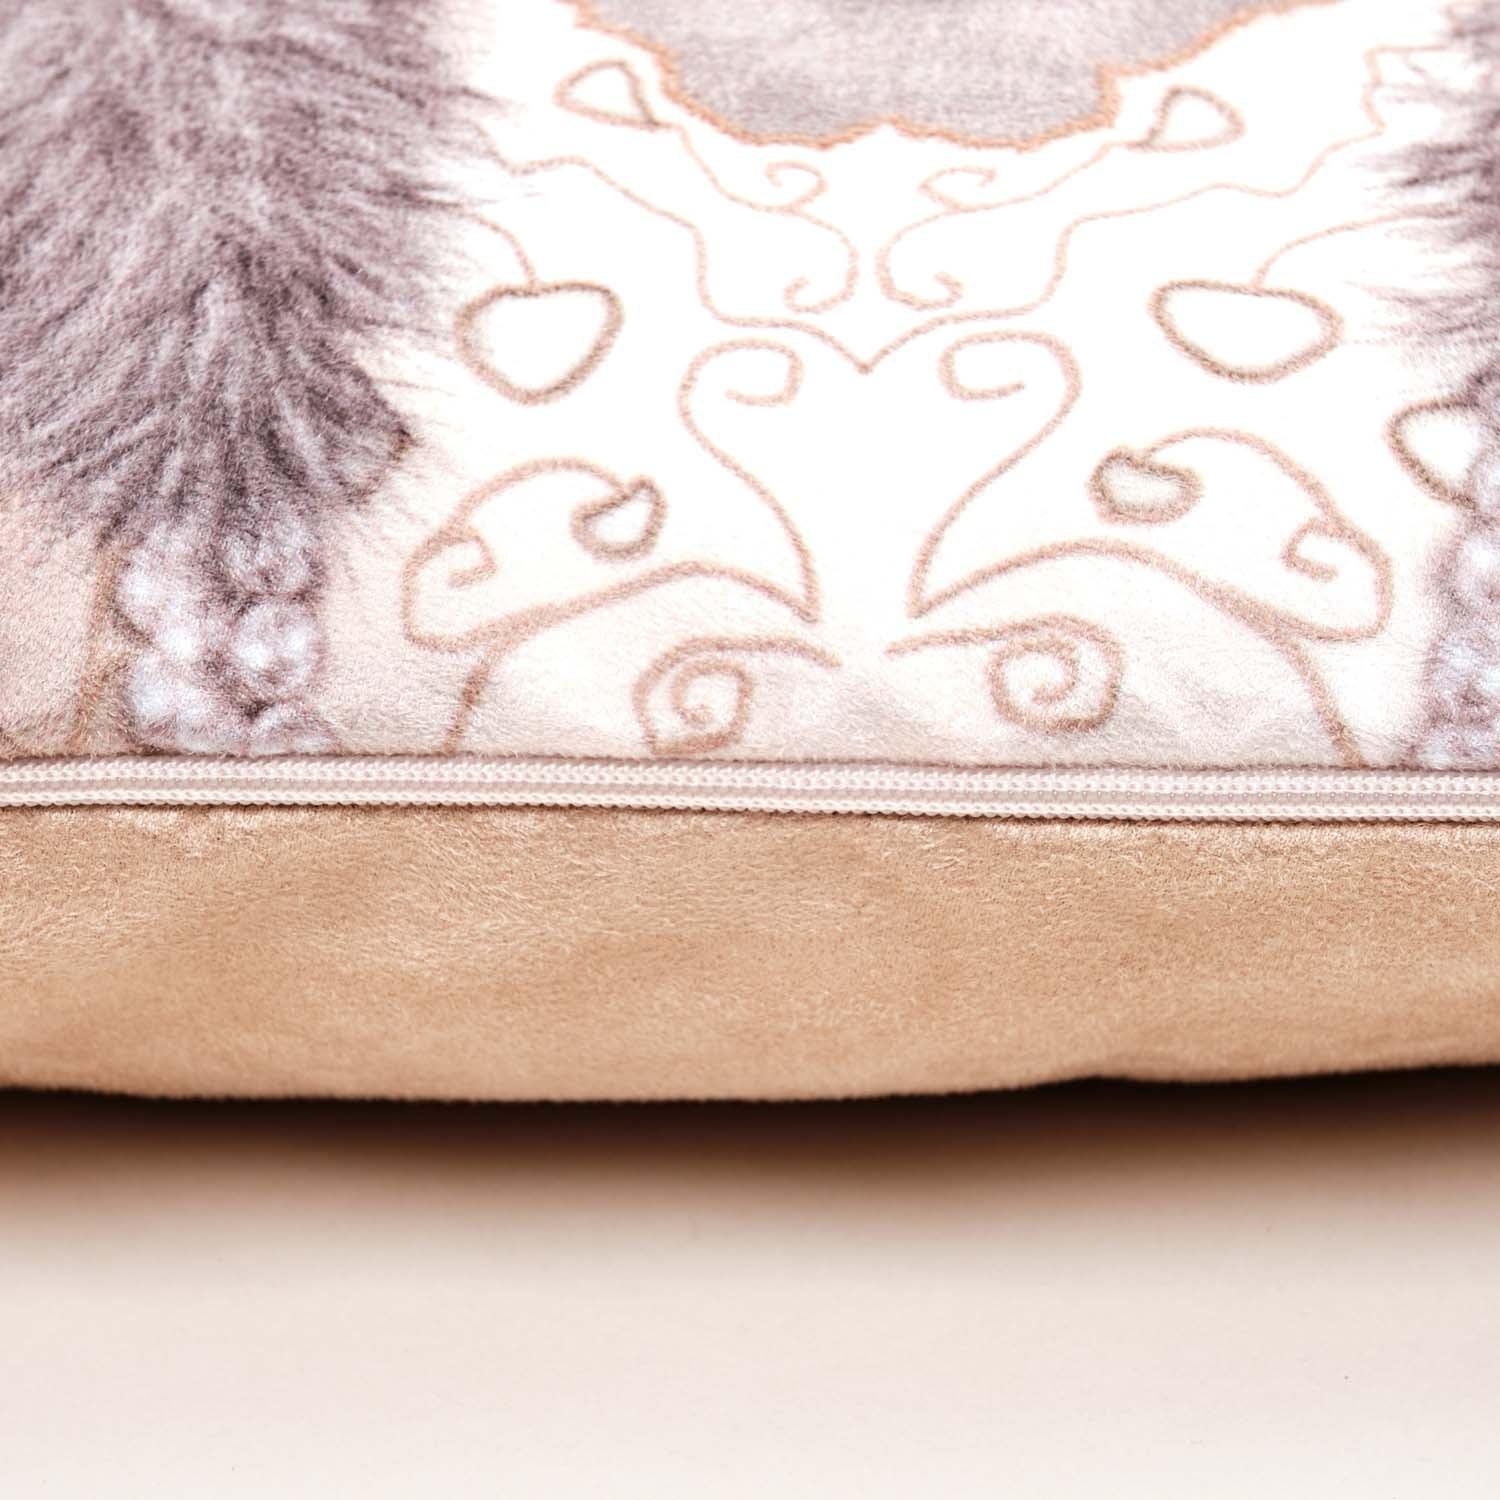 Detective - Pets Rock Cushion - Handmade Cushions UK - WeLoveCushions